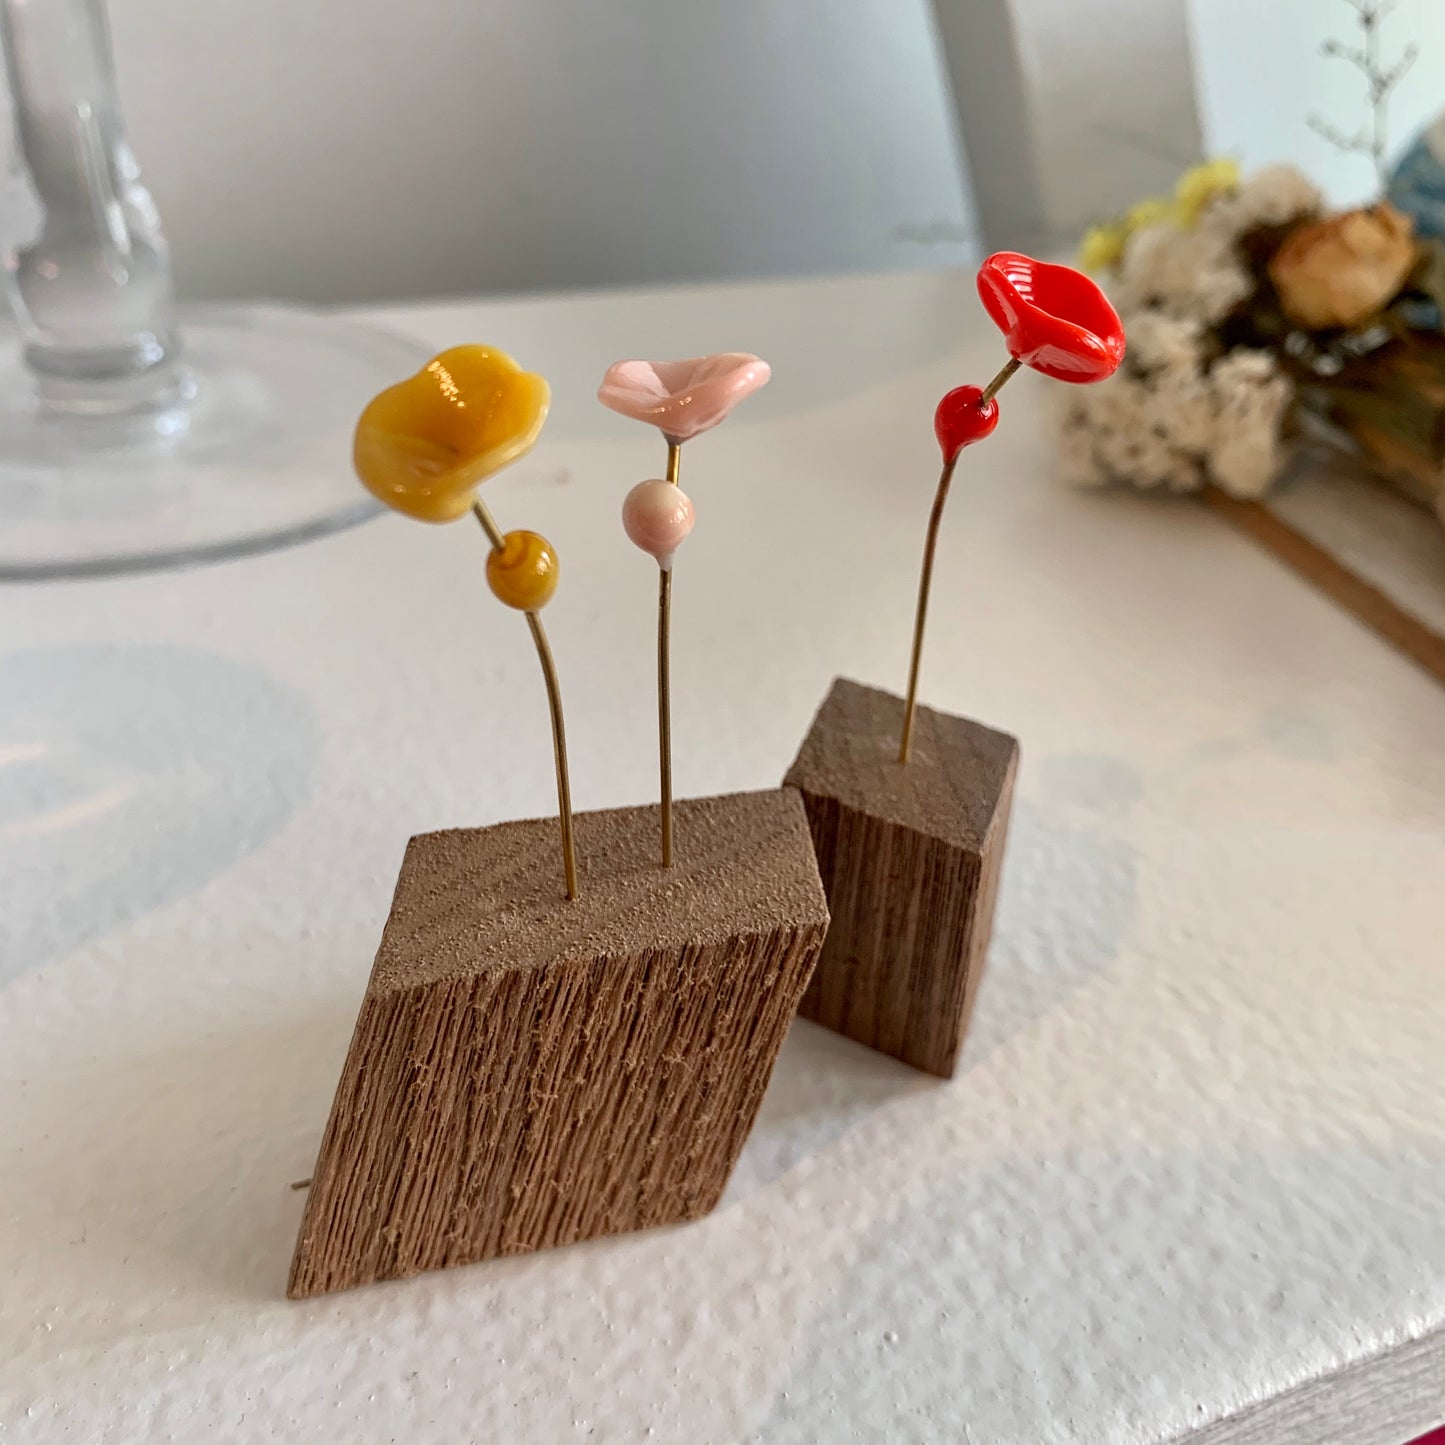 Verre Modern Kali Flower Mini Sculptures